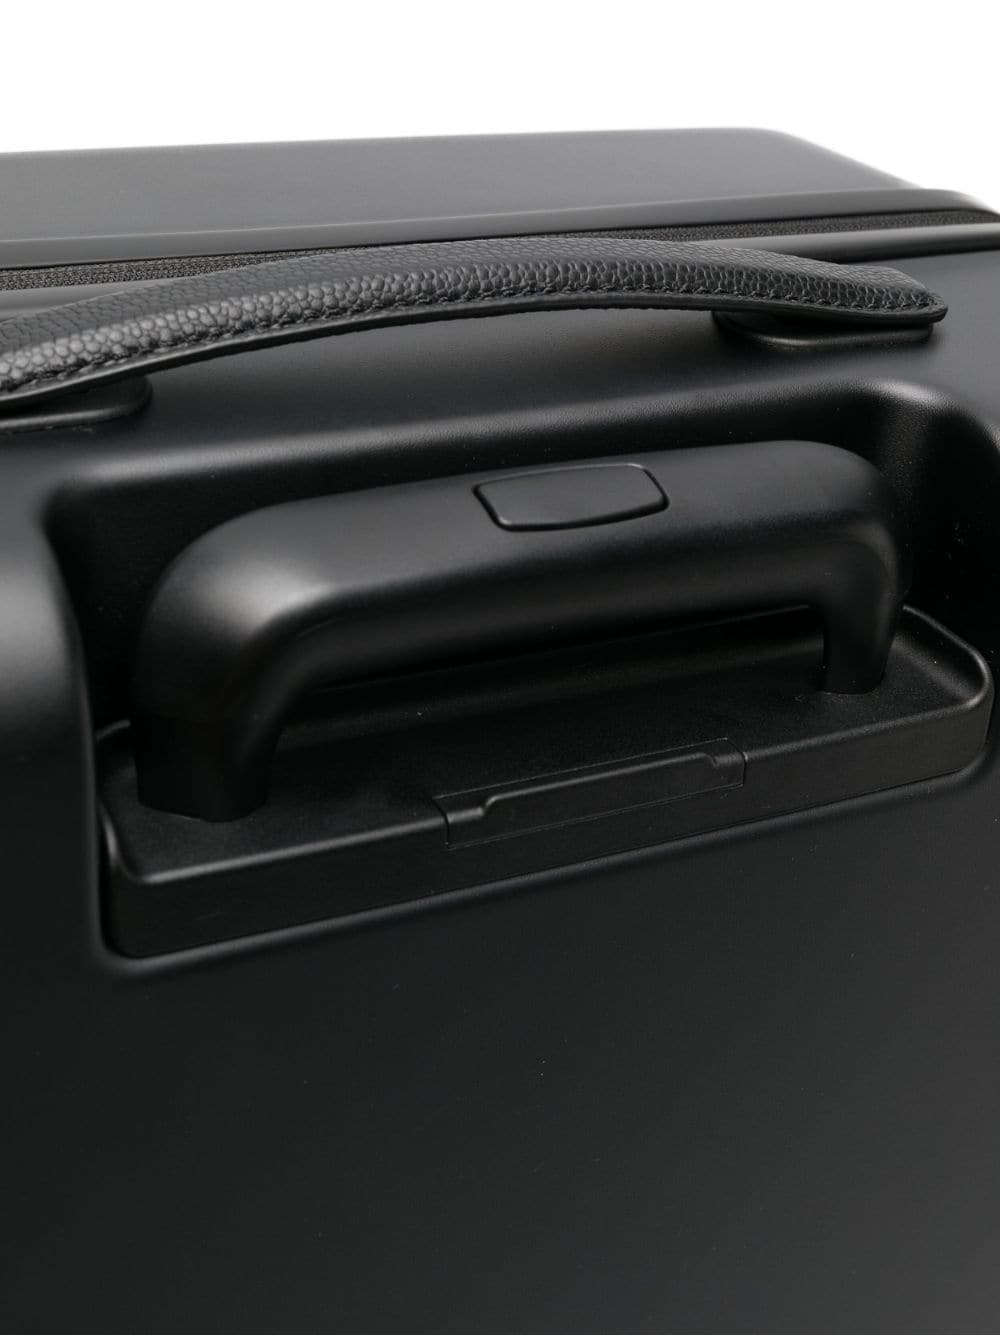 Neo Aviona Lining four-wheel luggage bag - 3